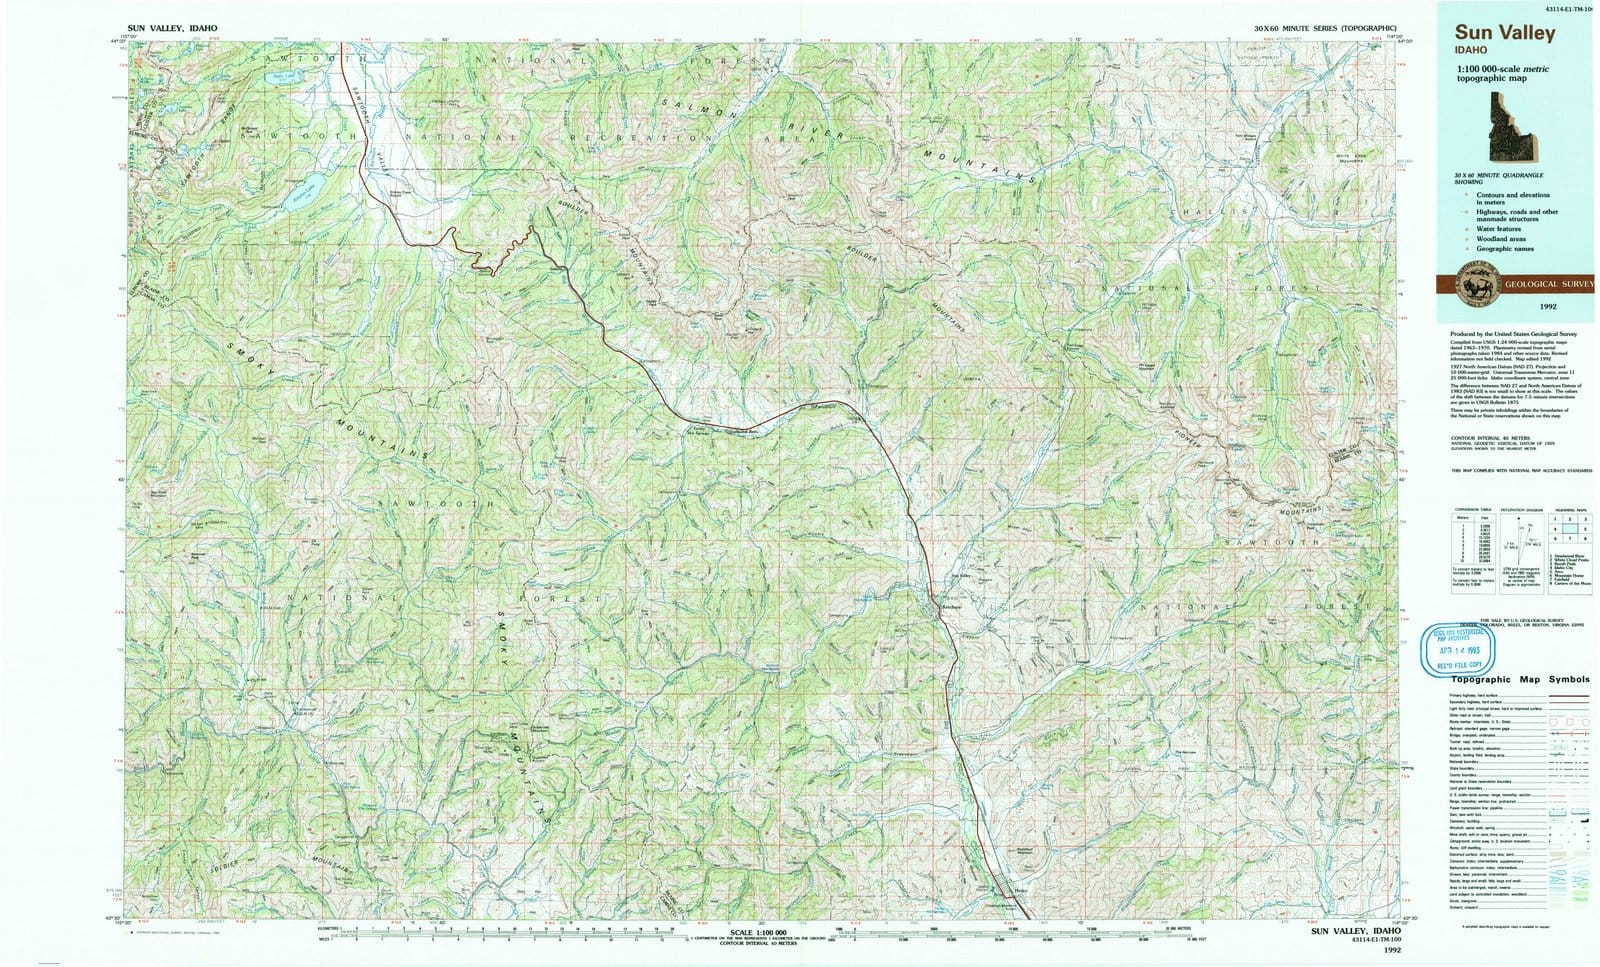 1992 Sun Valley, ID - Idaho - USGS Topographic Map